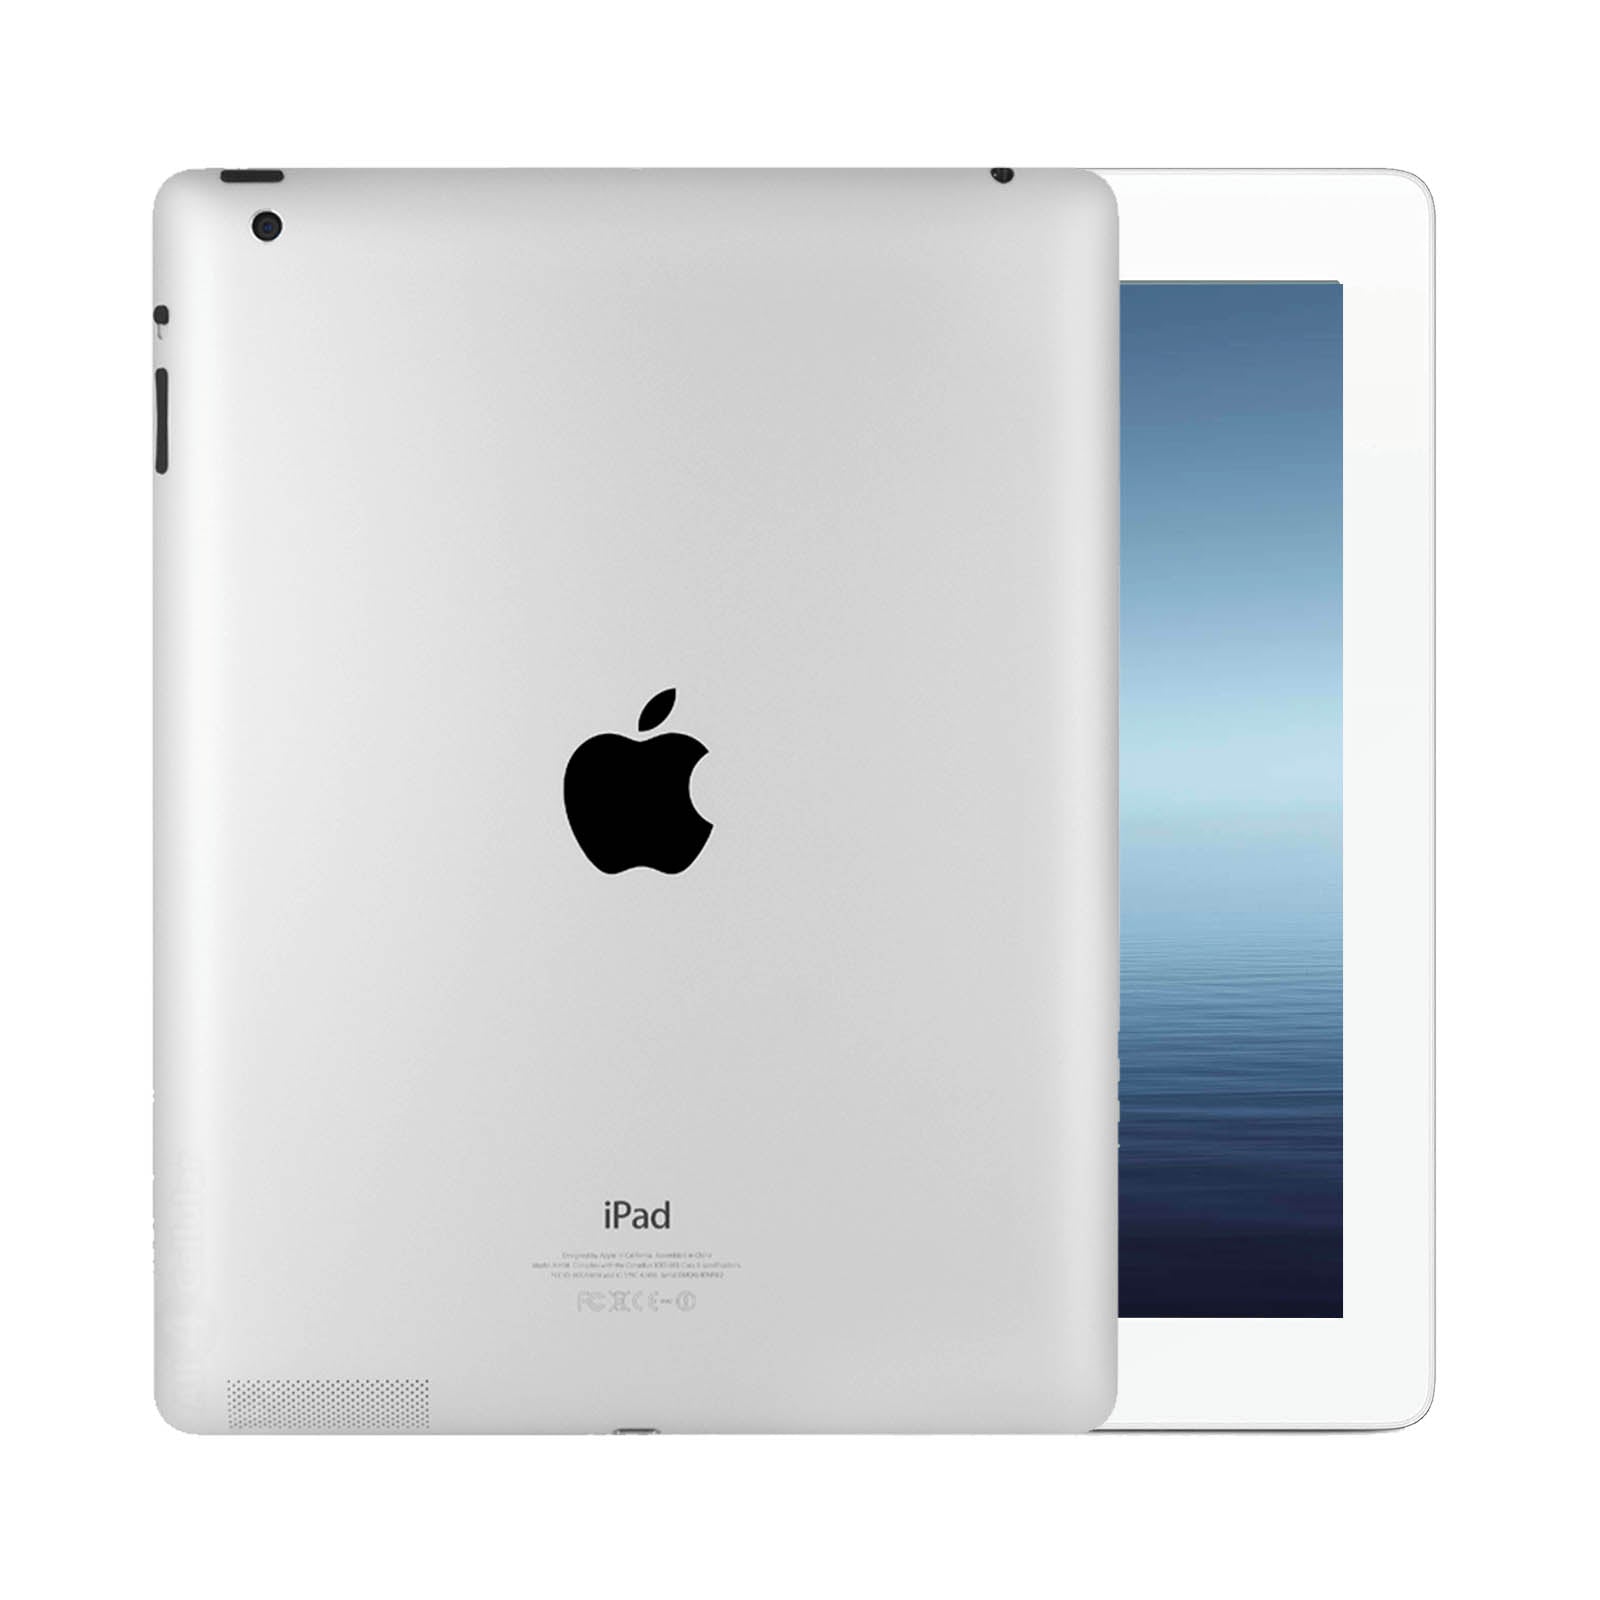 Apple iPad 3 64GB White Very Good - WiFI